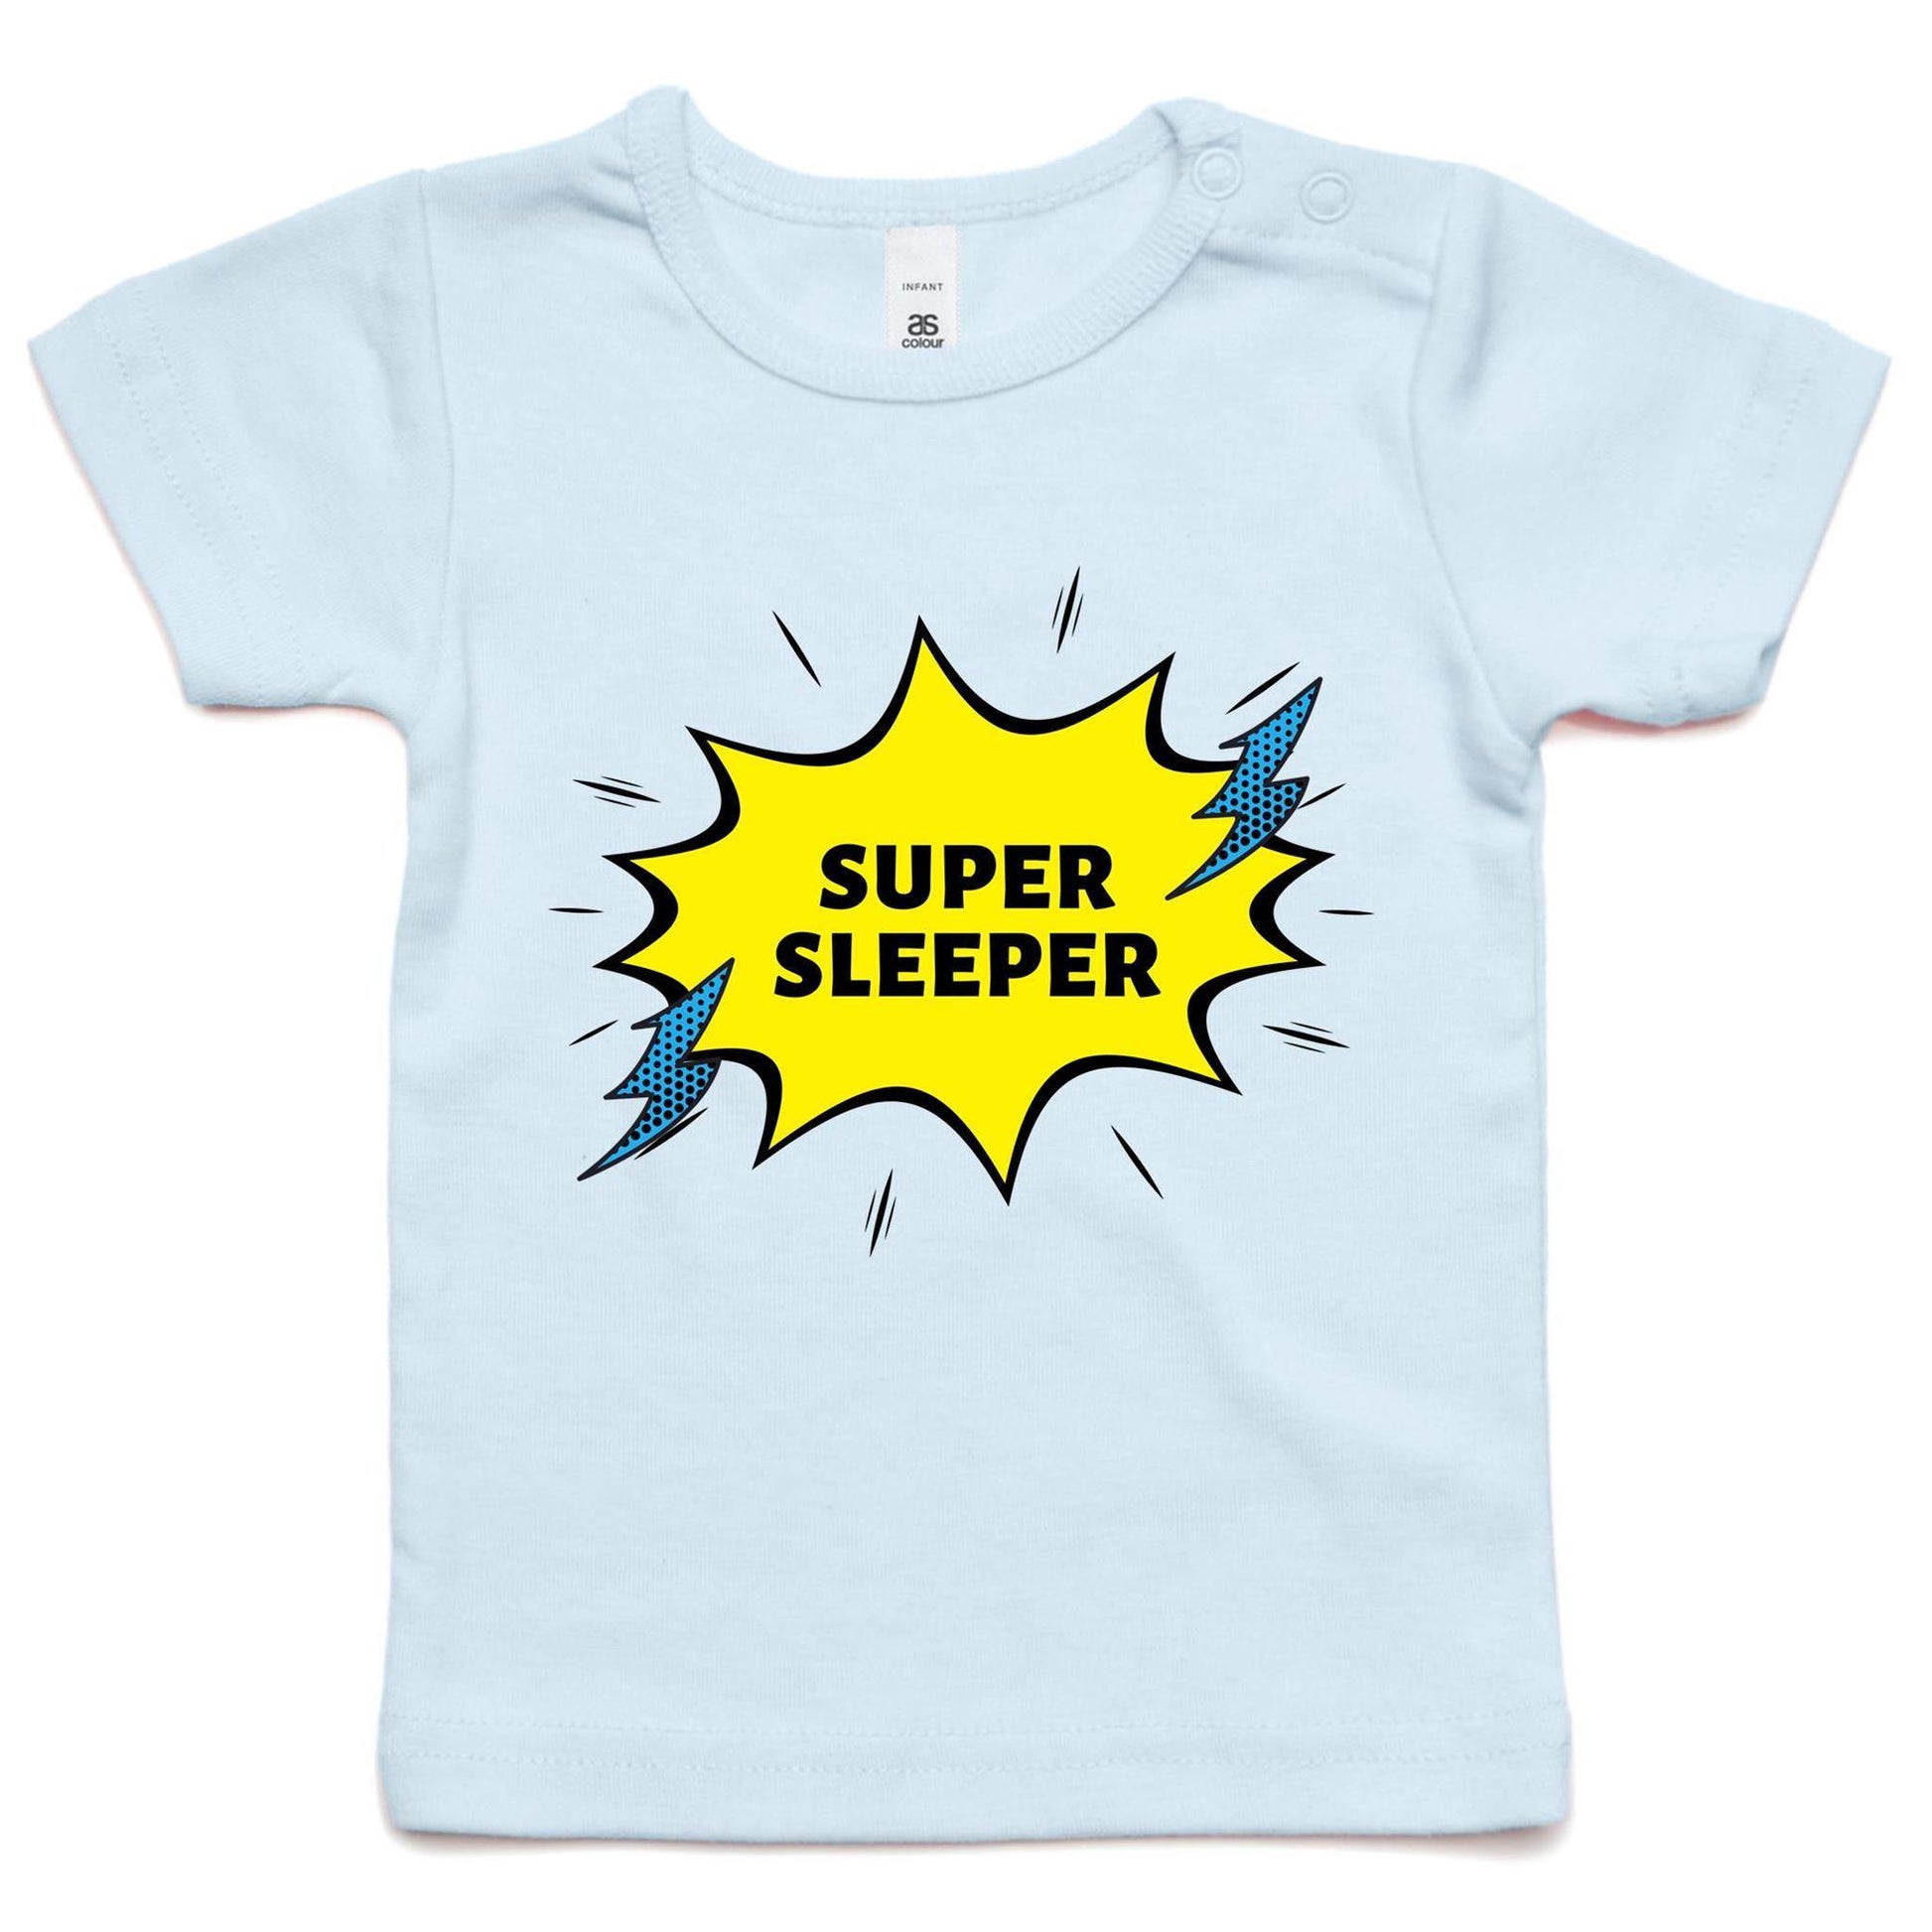 Super Sleeper - Baby T-shirt Powder Blue Baby T-shirt kids